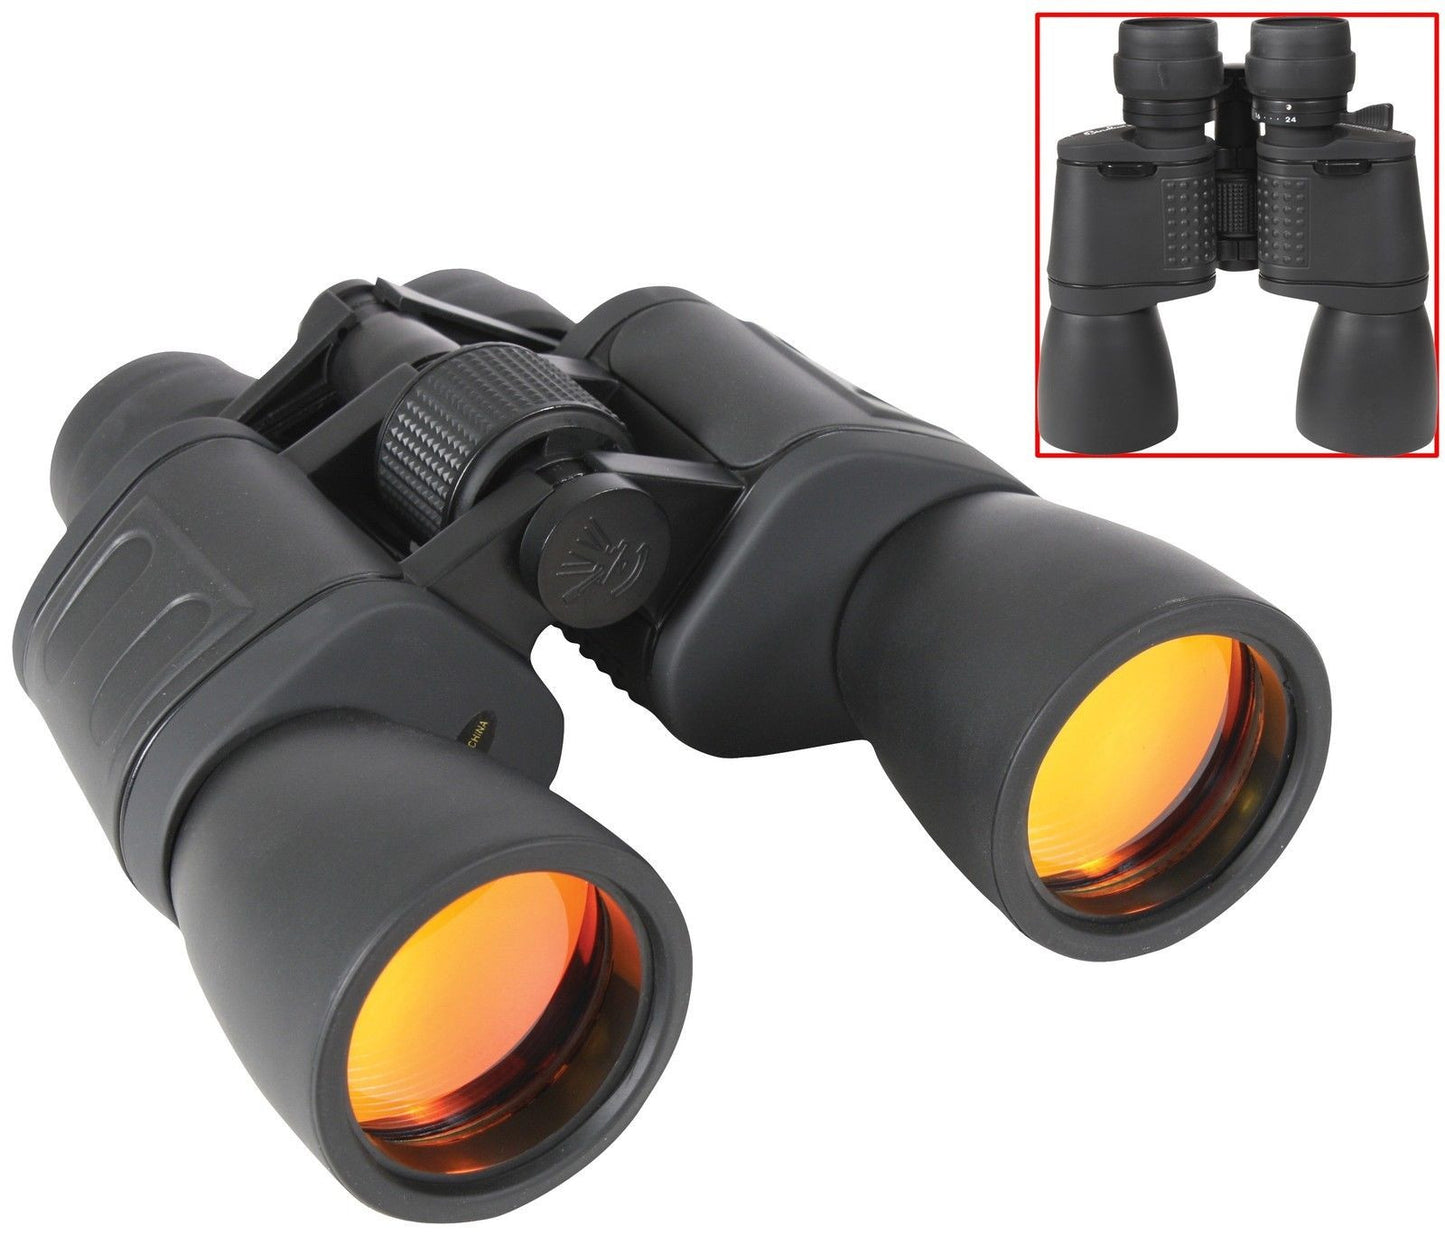 8-24 x 50 MM Deluxe Zoom Black Binoculars - Ruby Coat Lens - W/ Case & Neckstrap